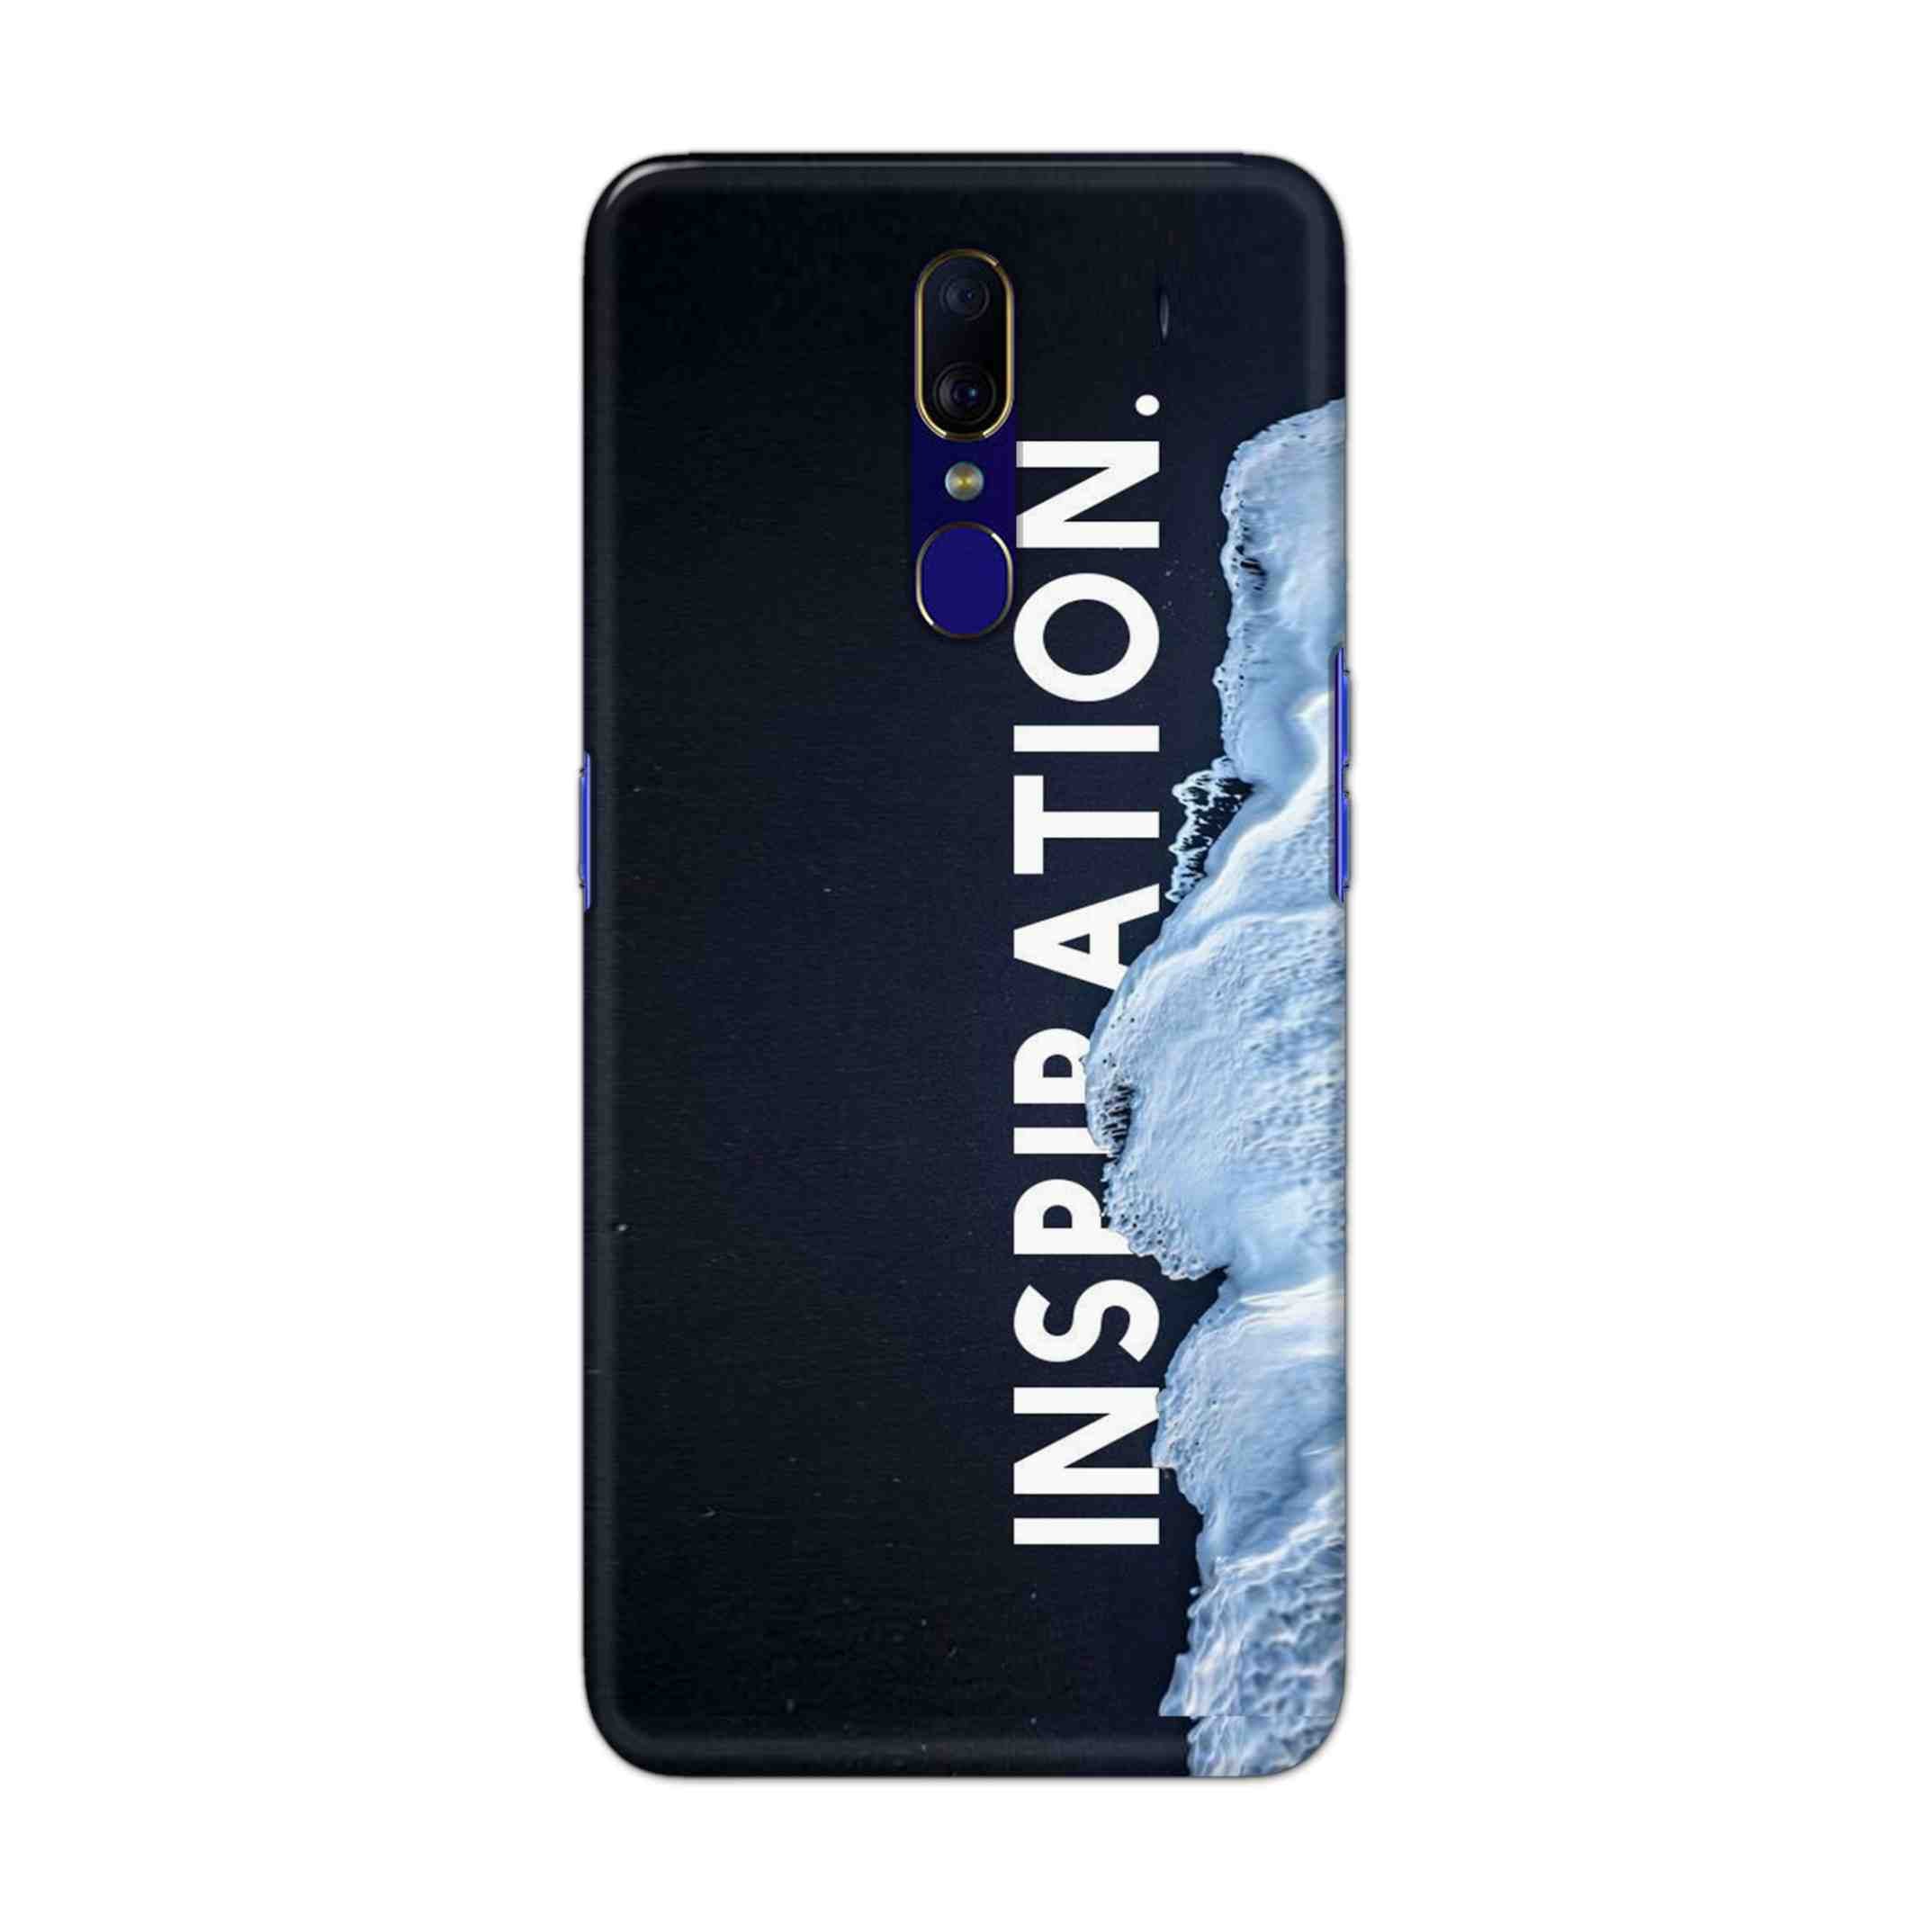 Buy Inspiration Hard Back Mobile Phone Case Cover For OPPO F11 Online